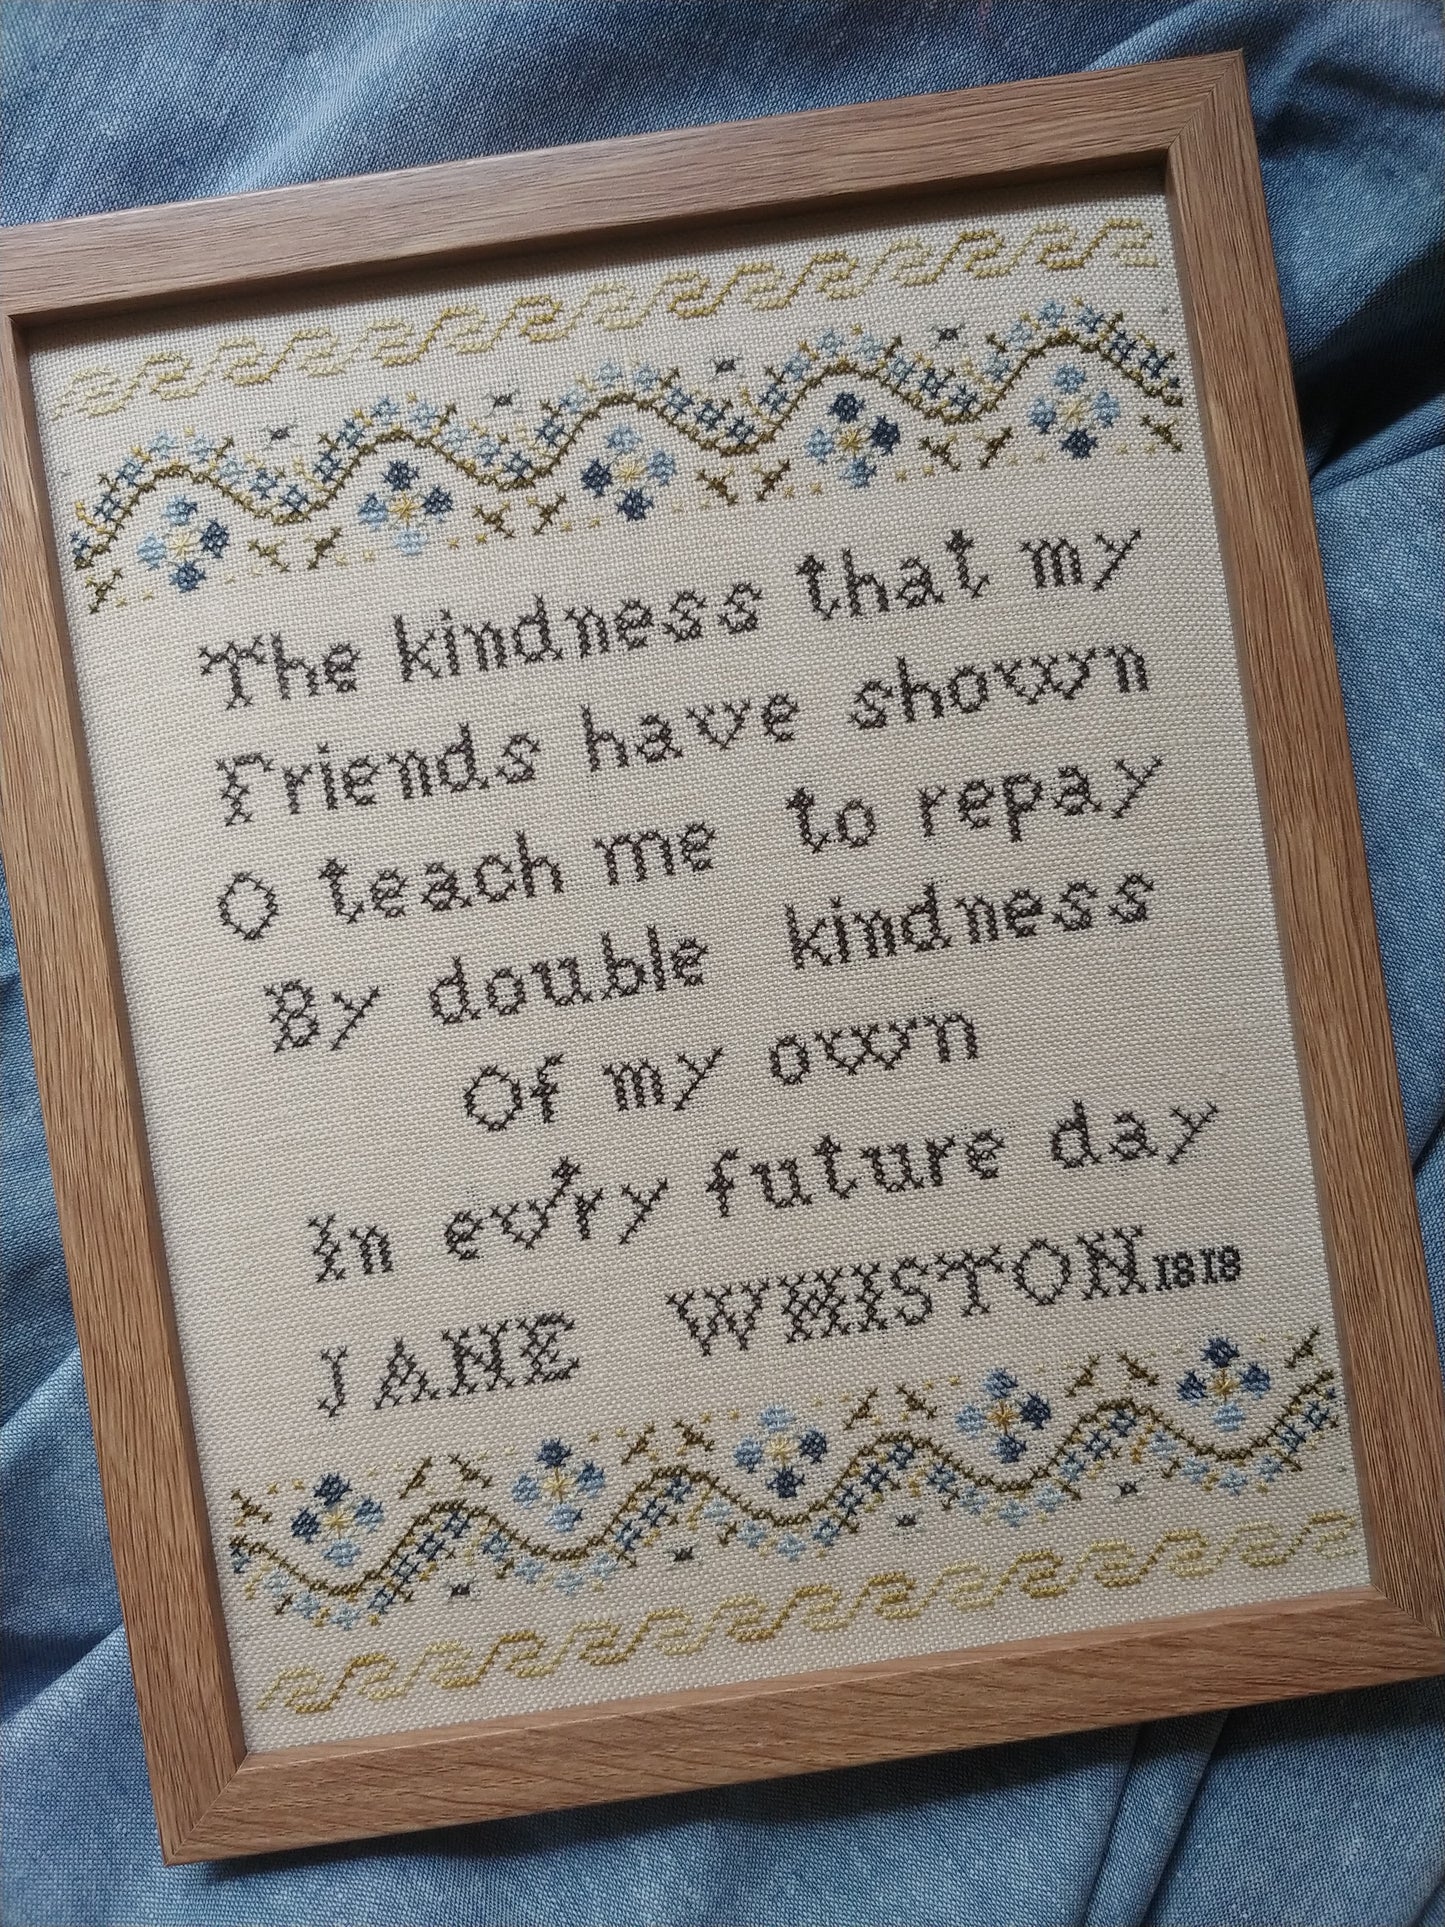 On Kindness: Jane Whiston 1818 - Cross Stitch Pattern by Mojo Stitches